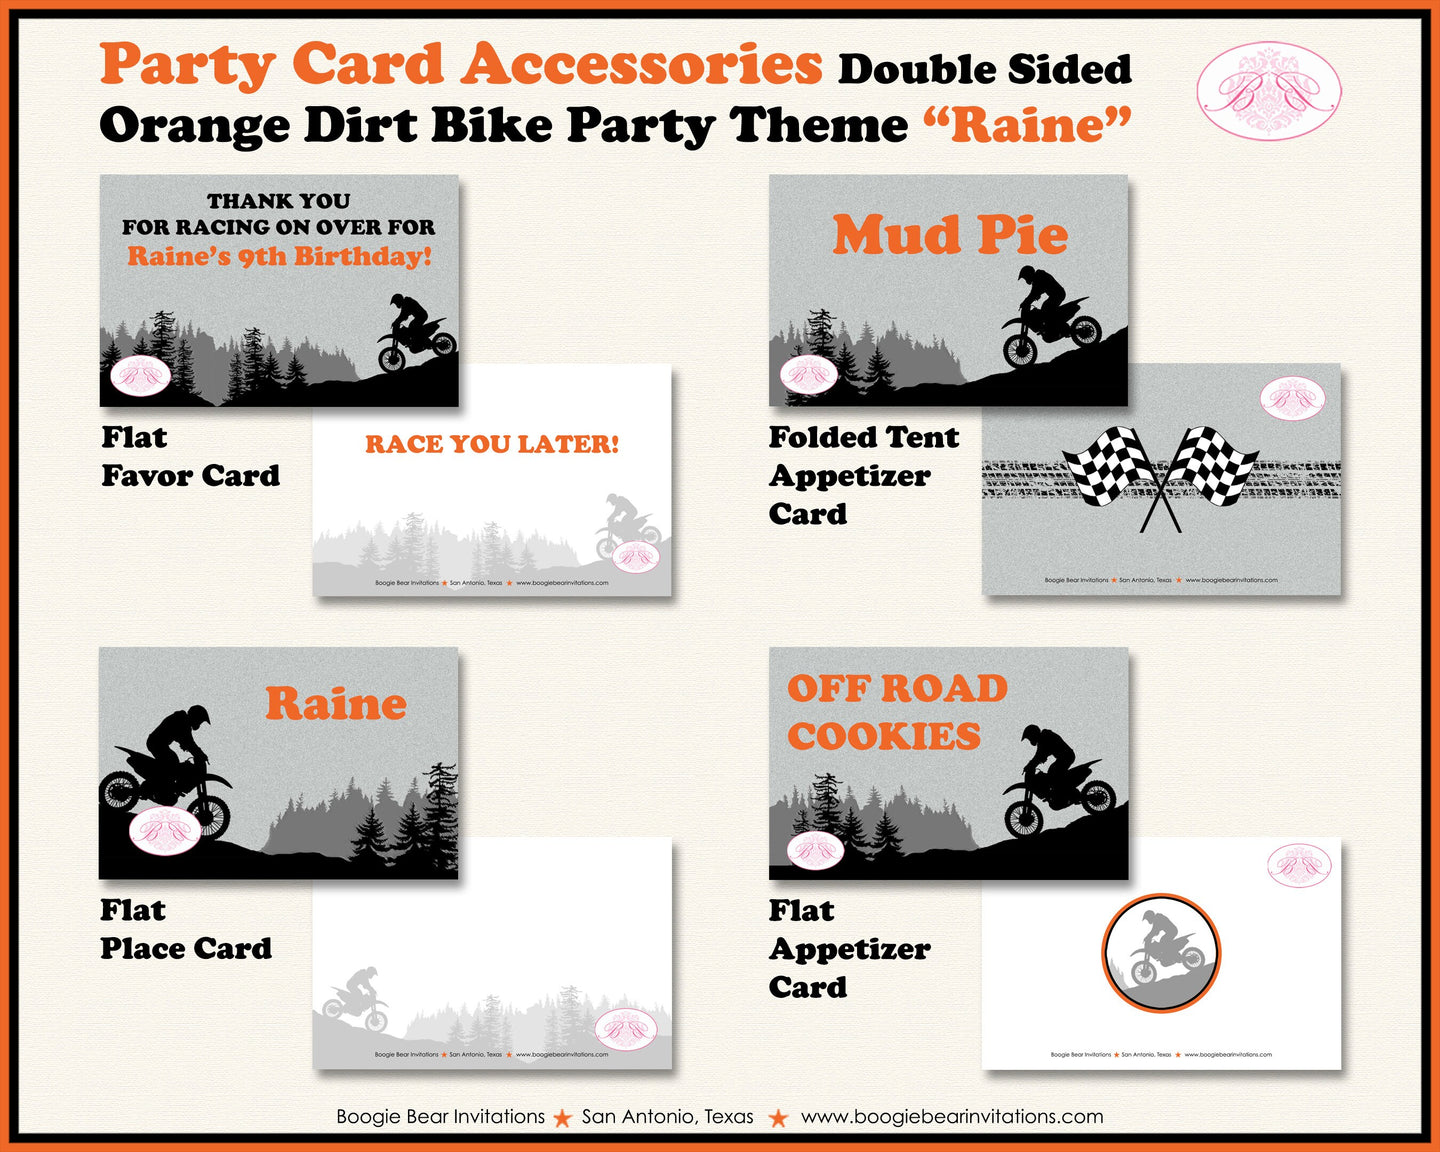 Orange Dirt Bike Birthday Party Favor Card Tent Appetizer Place Enduro Motocross Motorcycle Racing Race Boogie Bear Invitations Raine Theme